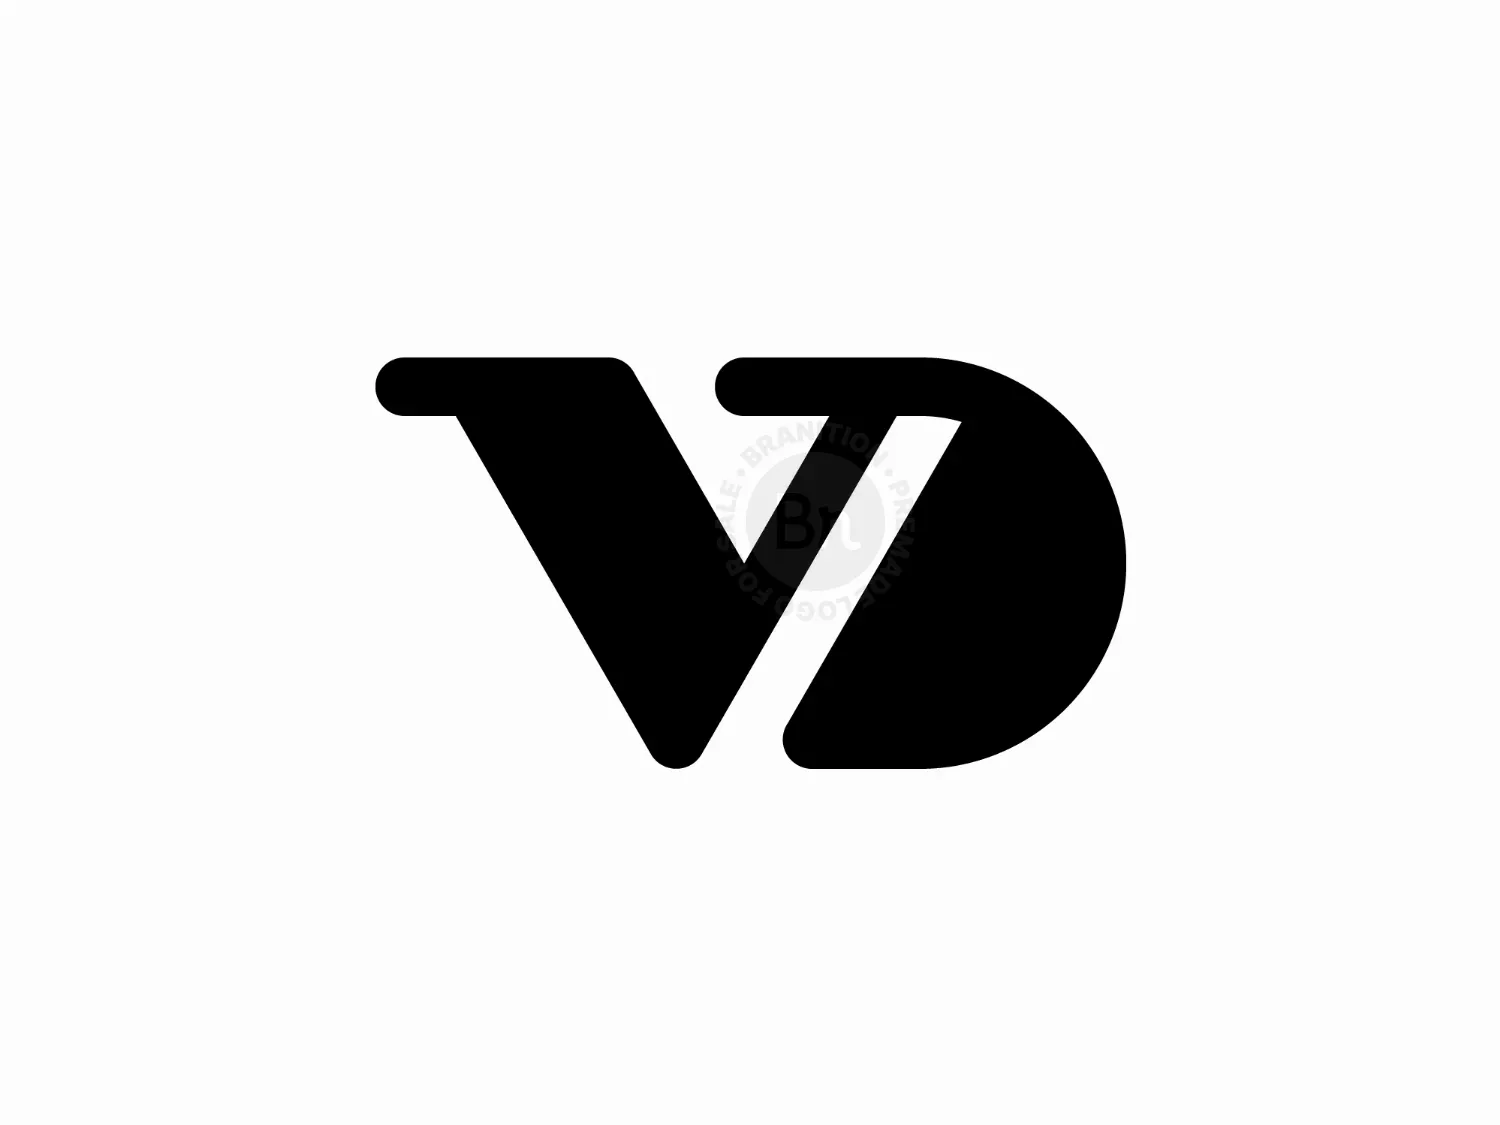 Premium Vector | A logo for a company called vv company.